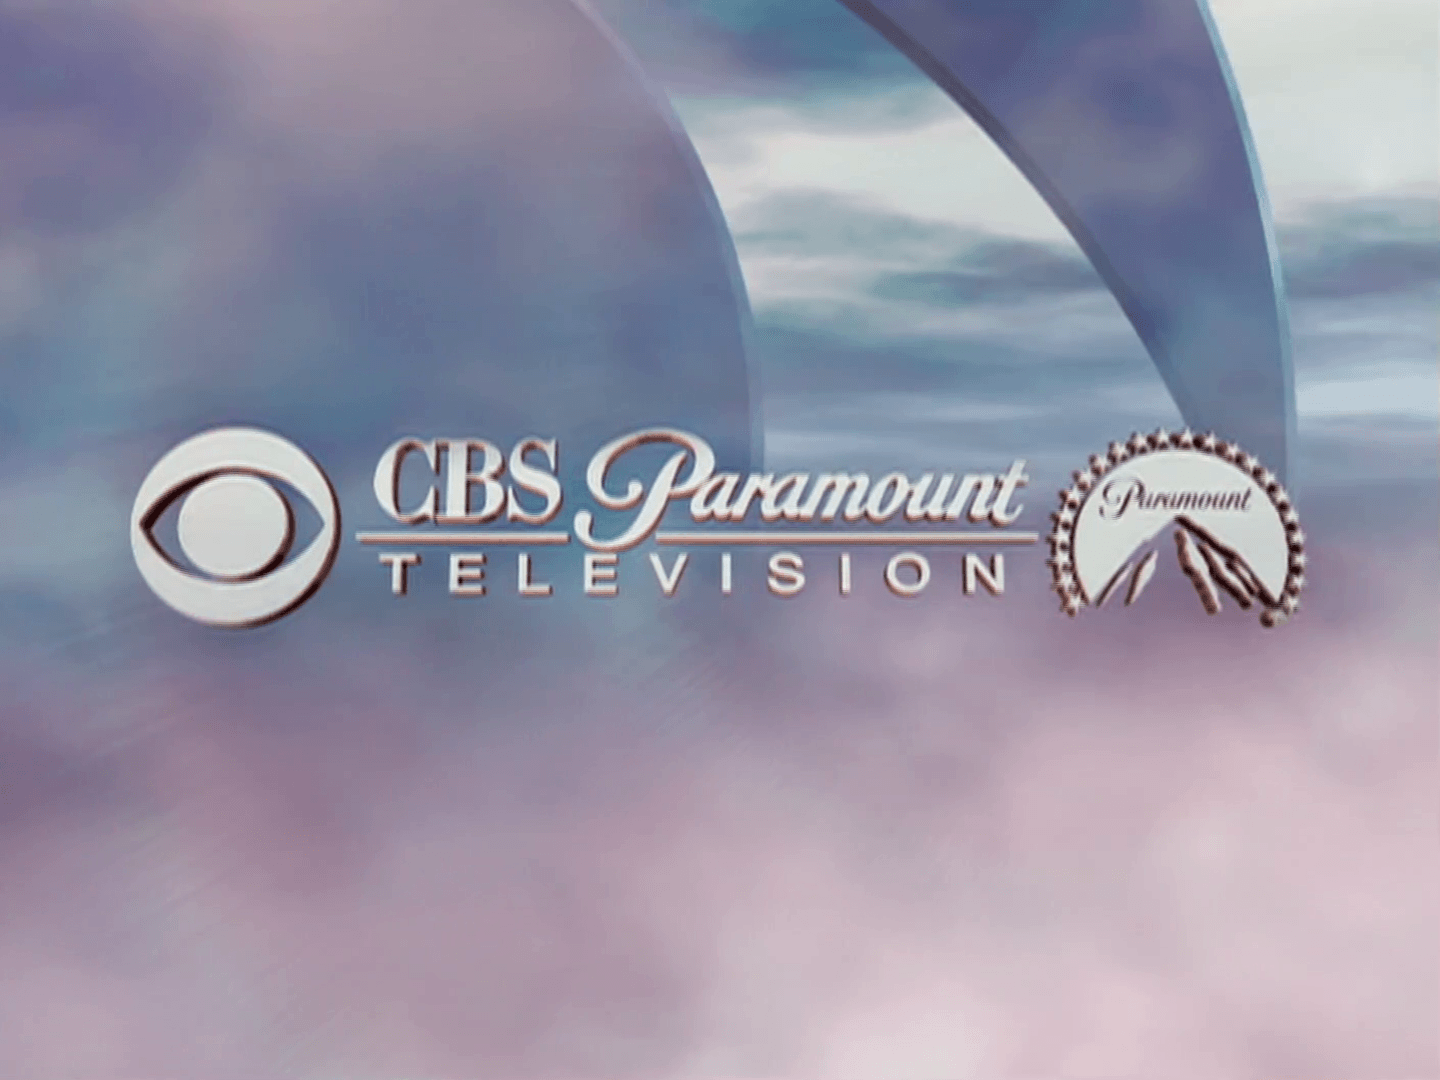 Paramount Television Logo - CBS Paramount Television/Other | Logopedia | FANDOM powered by Wikia